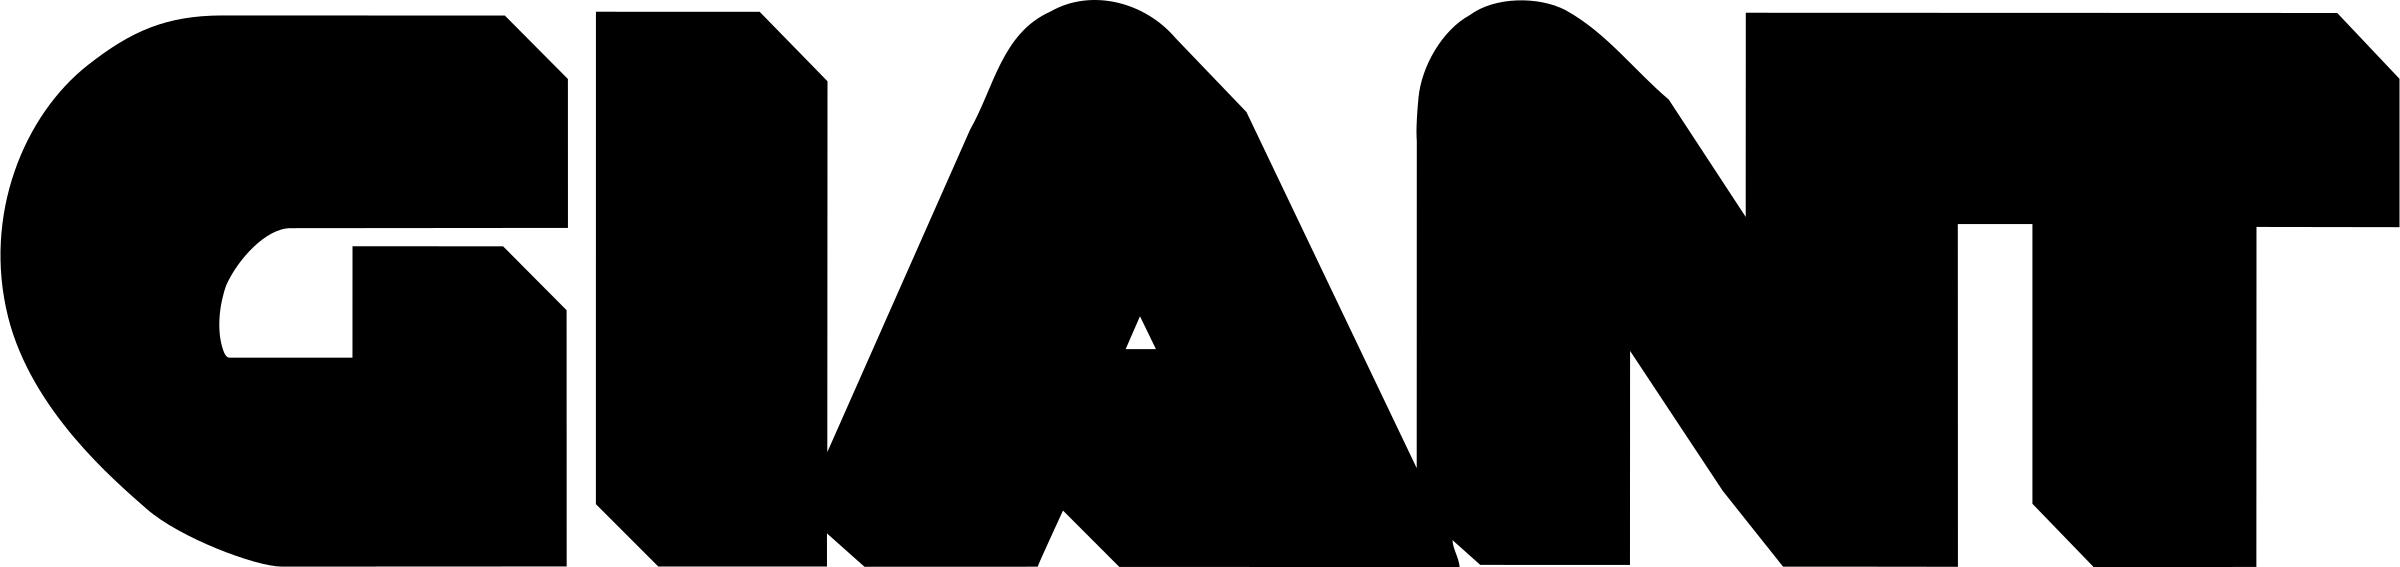 Giant Supermarkets 1 Logo Black And White - Silhouette (2400x567)